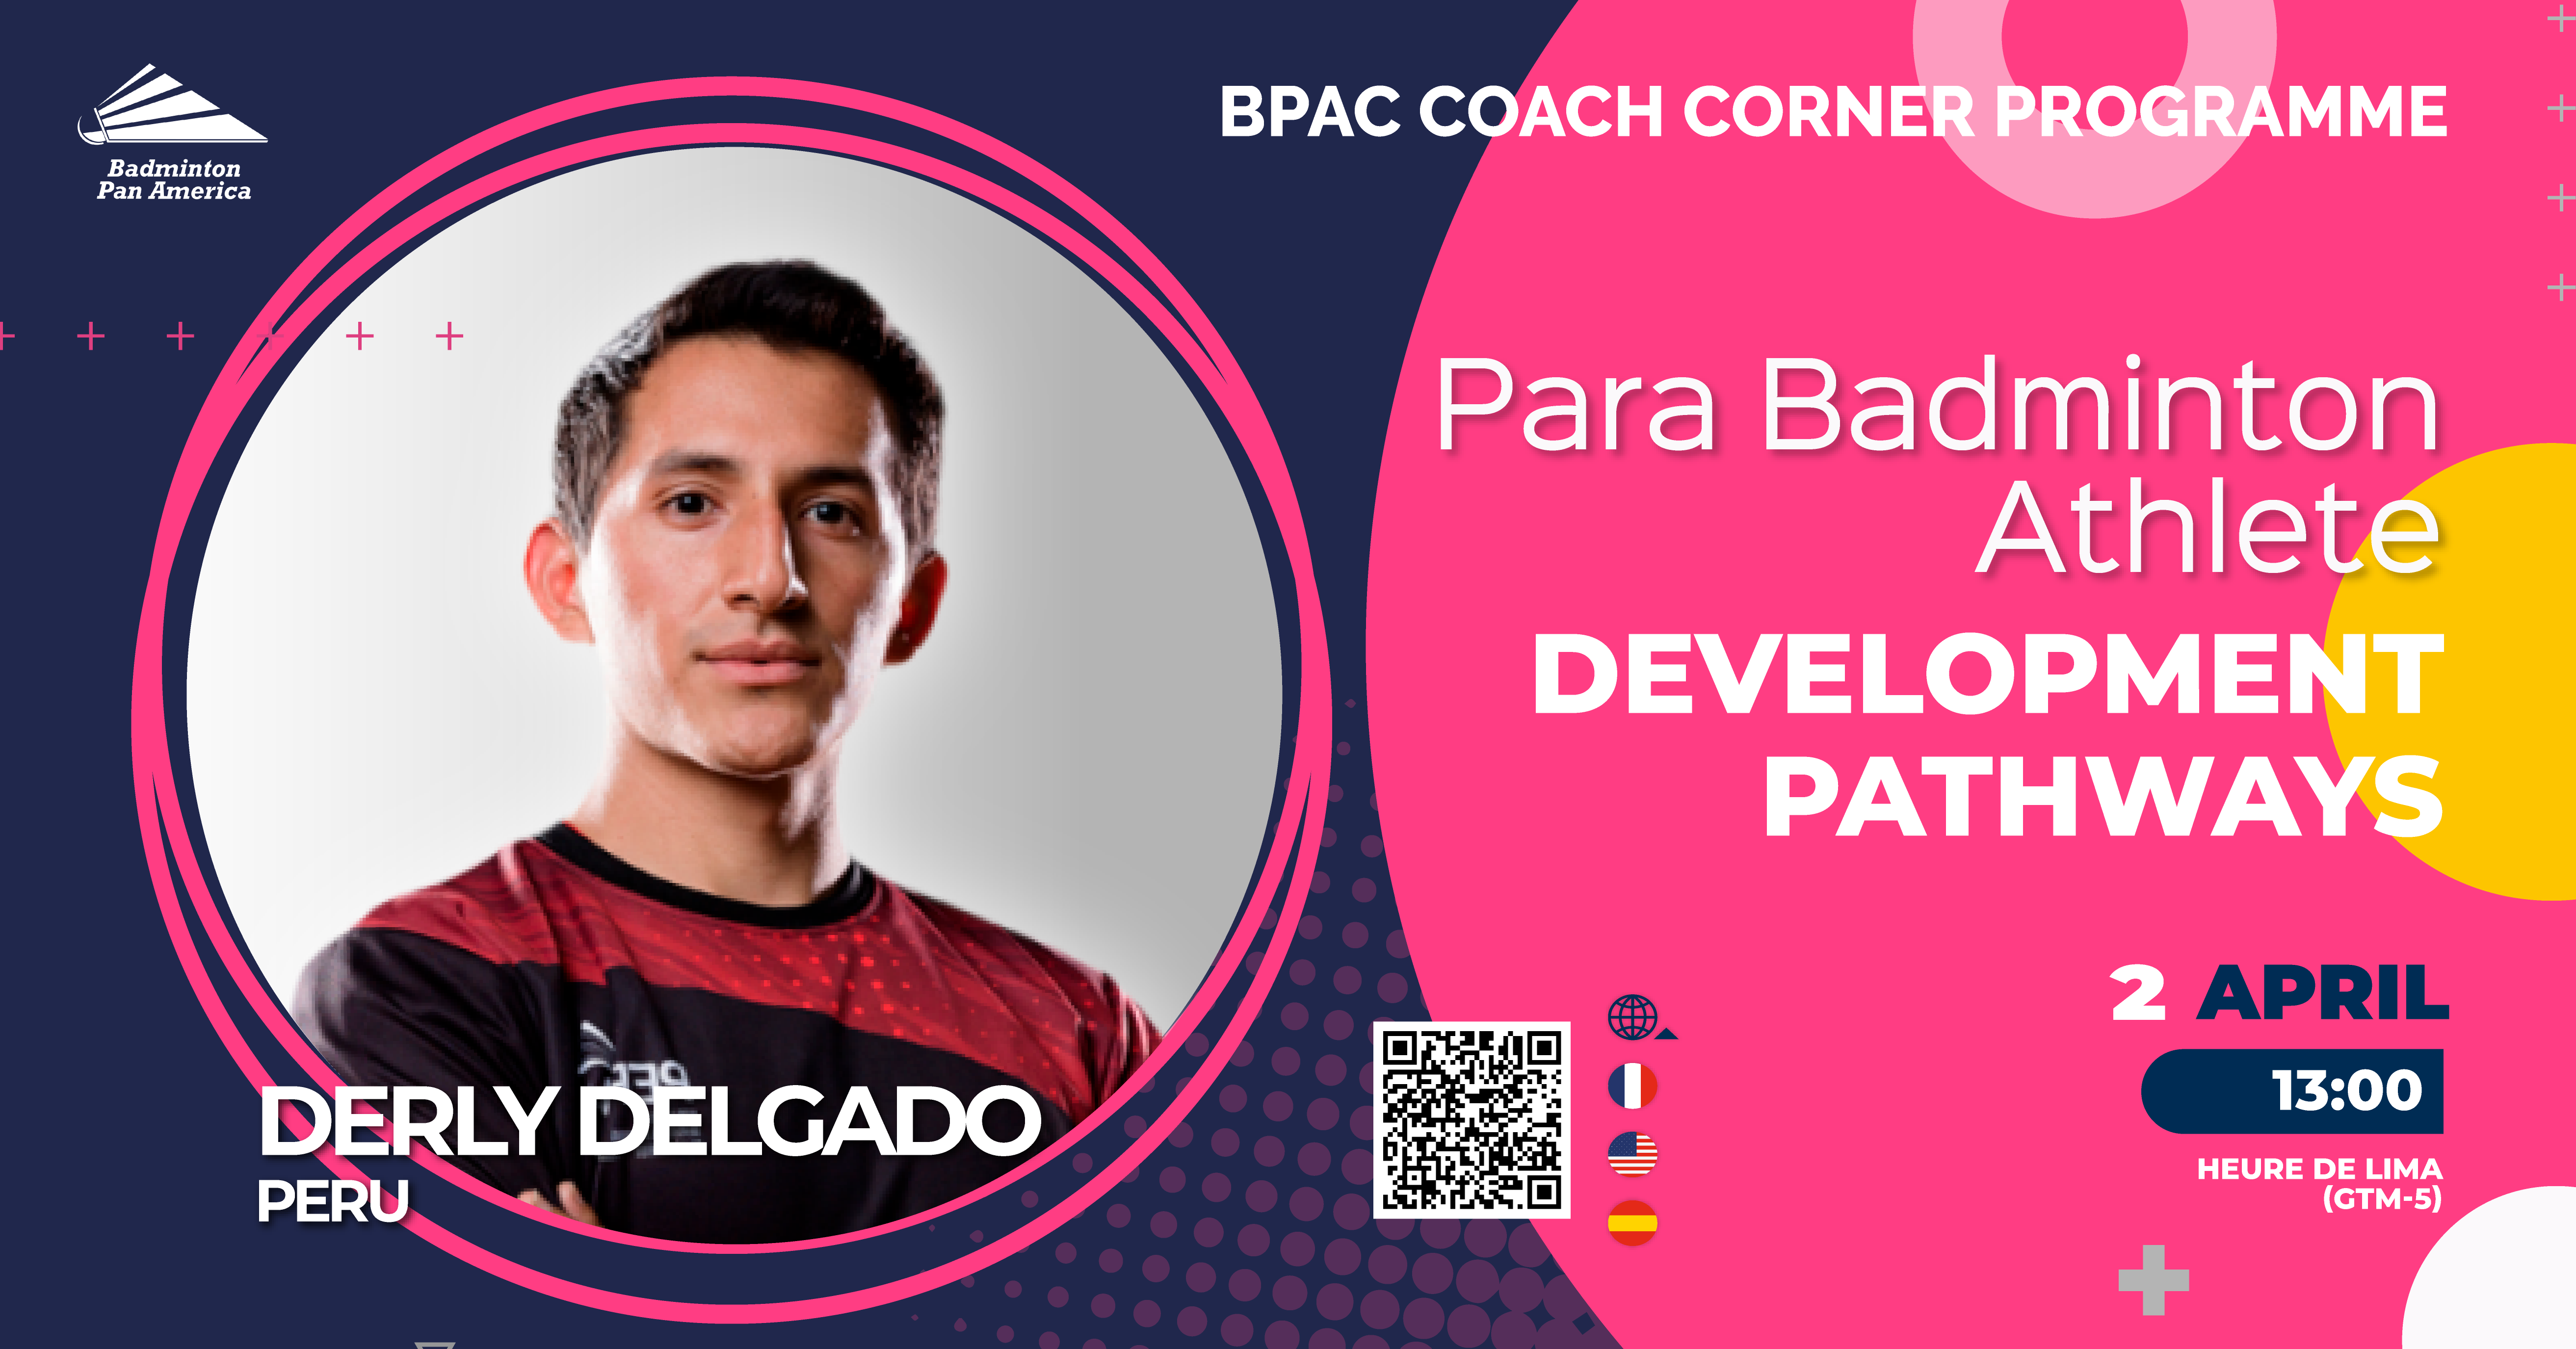 BPAC Coach Corner Programme